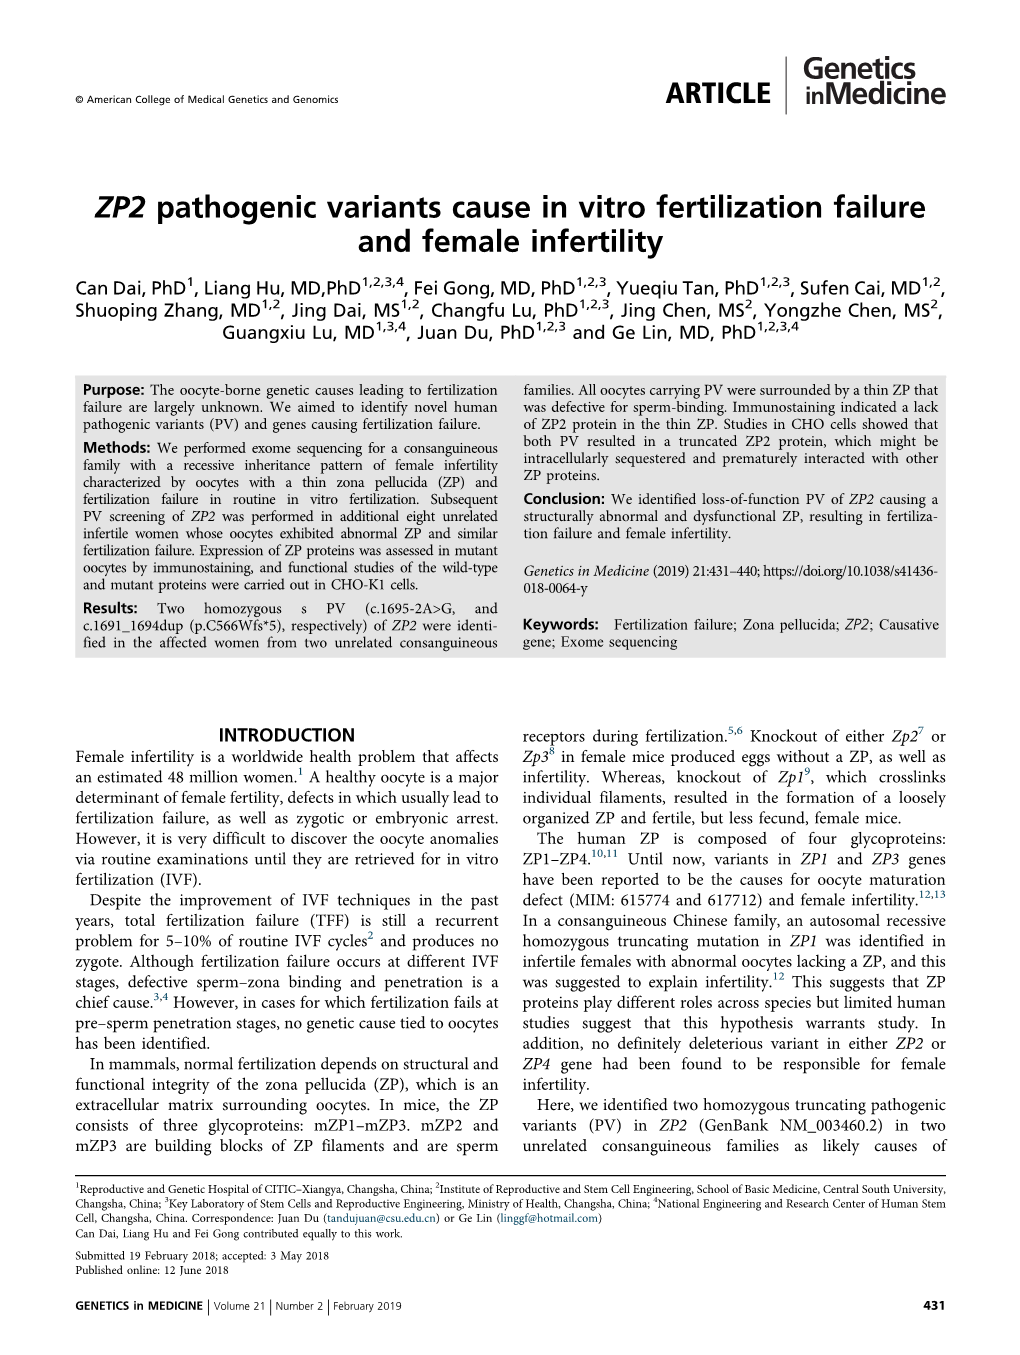 ZP2 Pathogenic Variants Cause in Vitro Fertilization Failure and Female Infertility